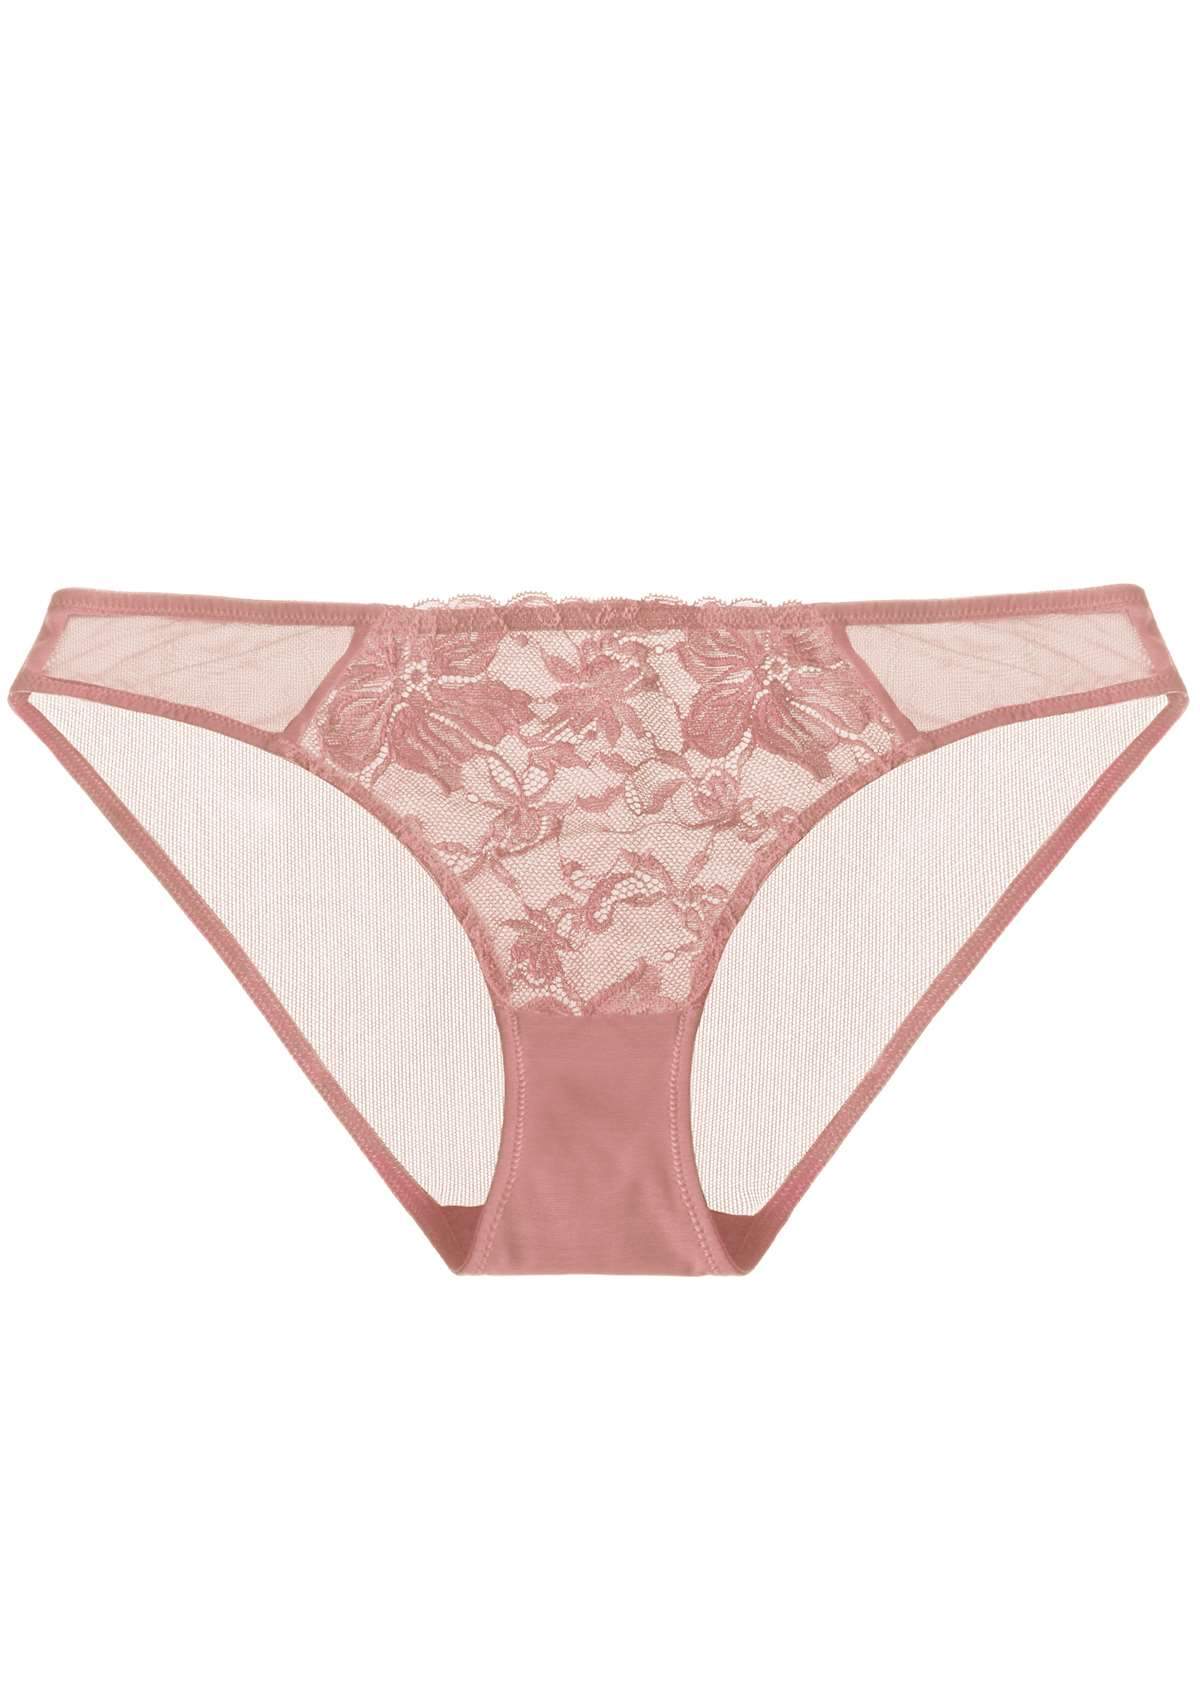 HSIA Pretty In Petals Sexy Everyday Lace Underwear  - XXL / Light Coral